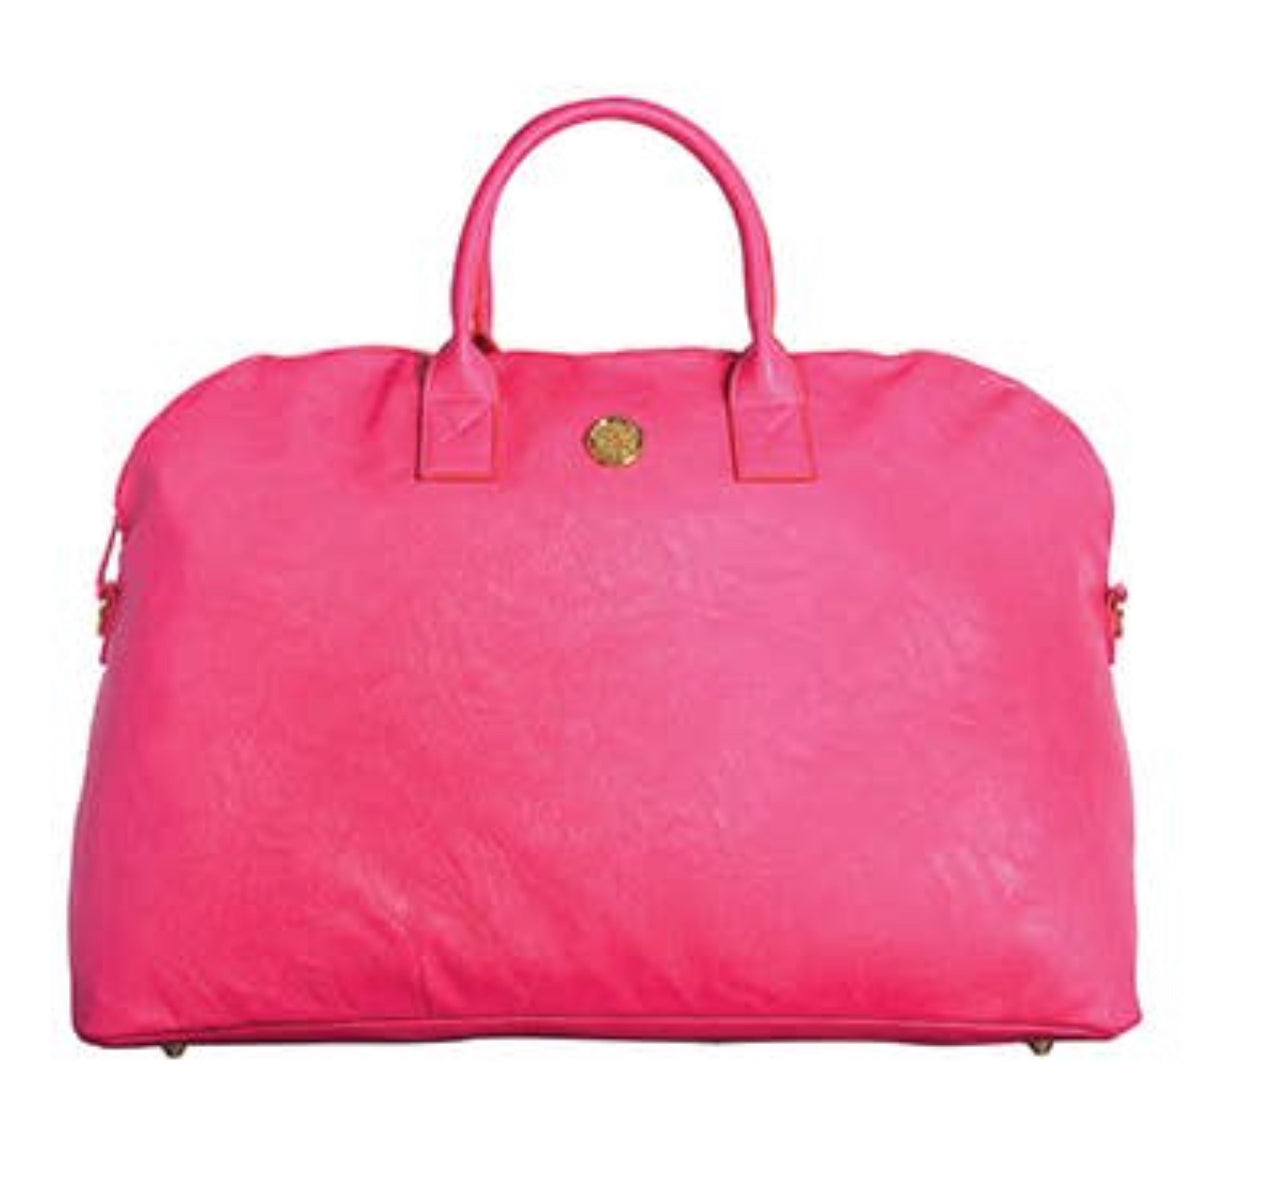 Grand Duffle Bag, Assorted Colors